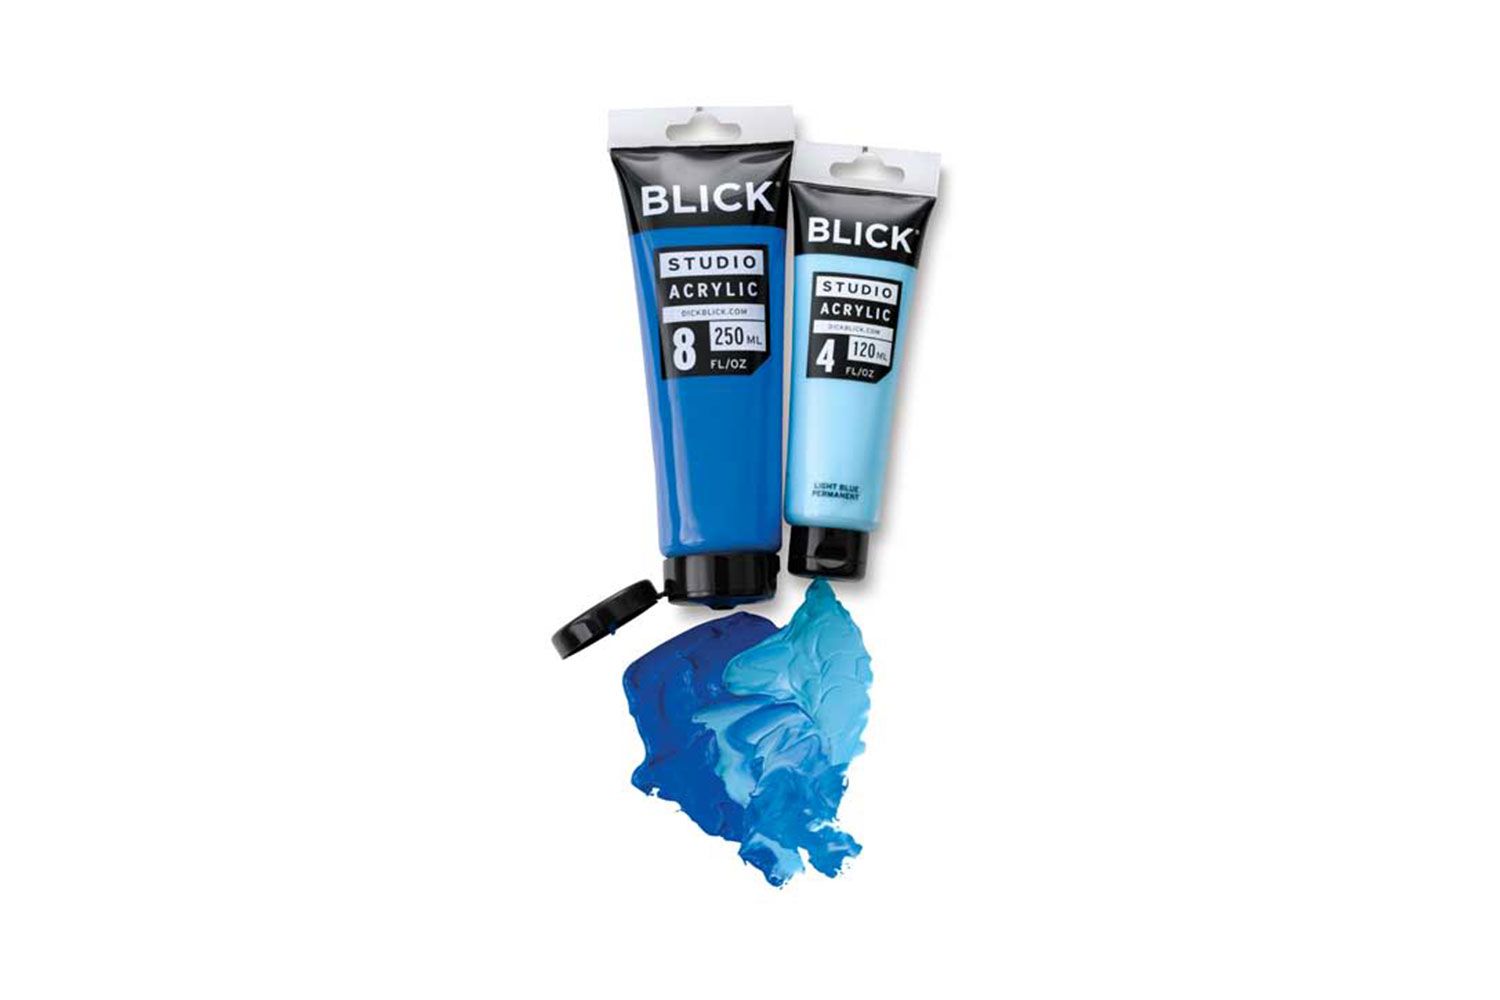 Blick-studio-acrylic-paints-and-sets